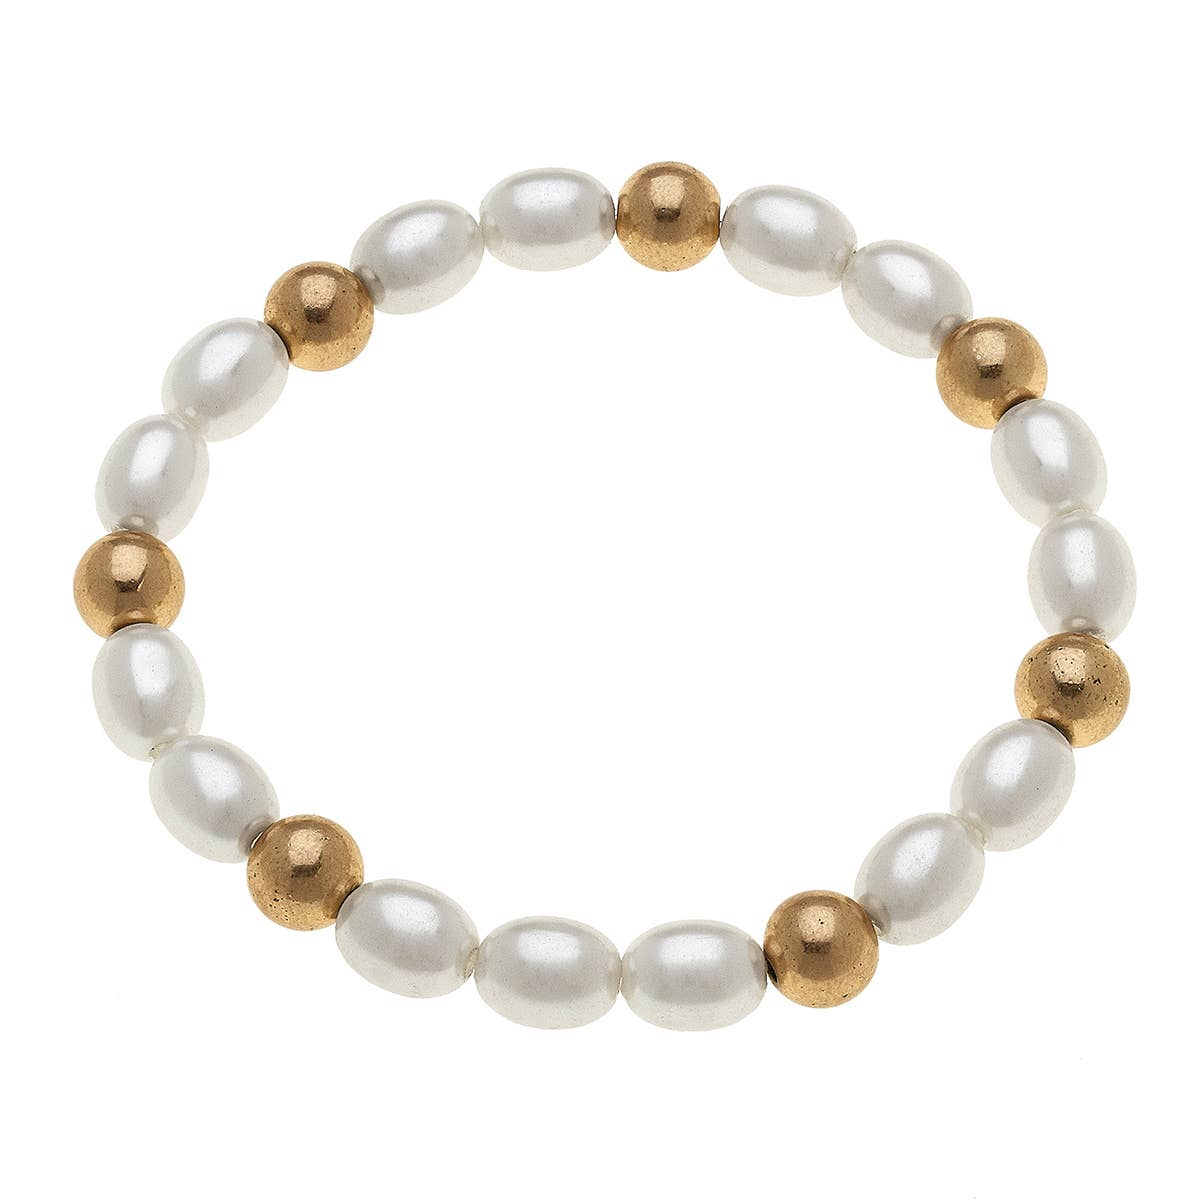 Elizabeth Stretch Bracelet in Ivory Pearl